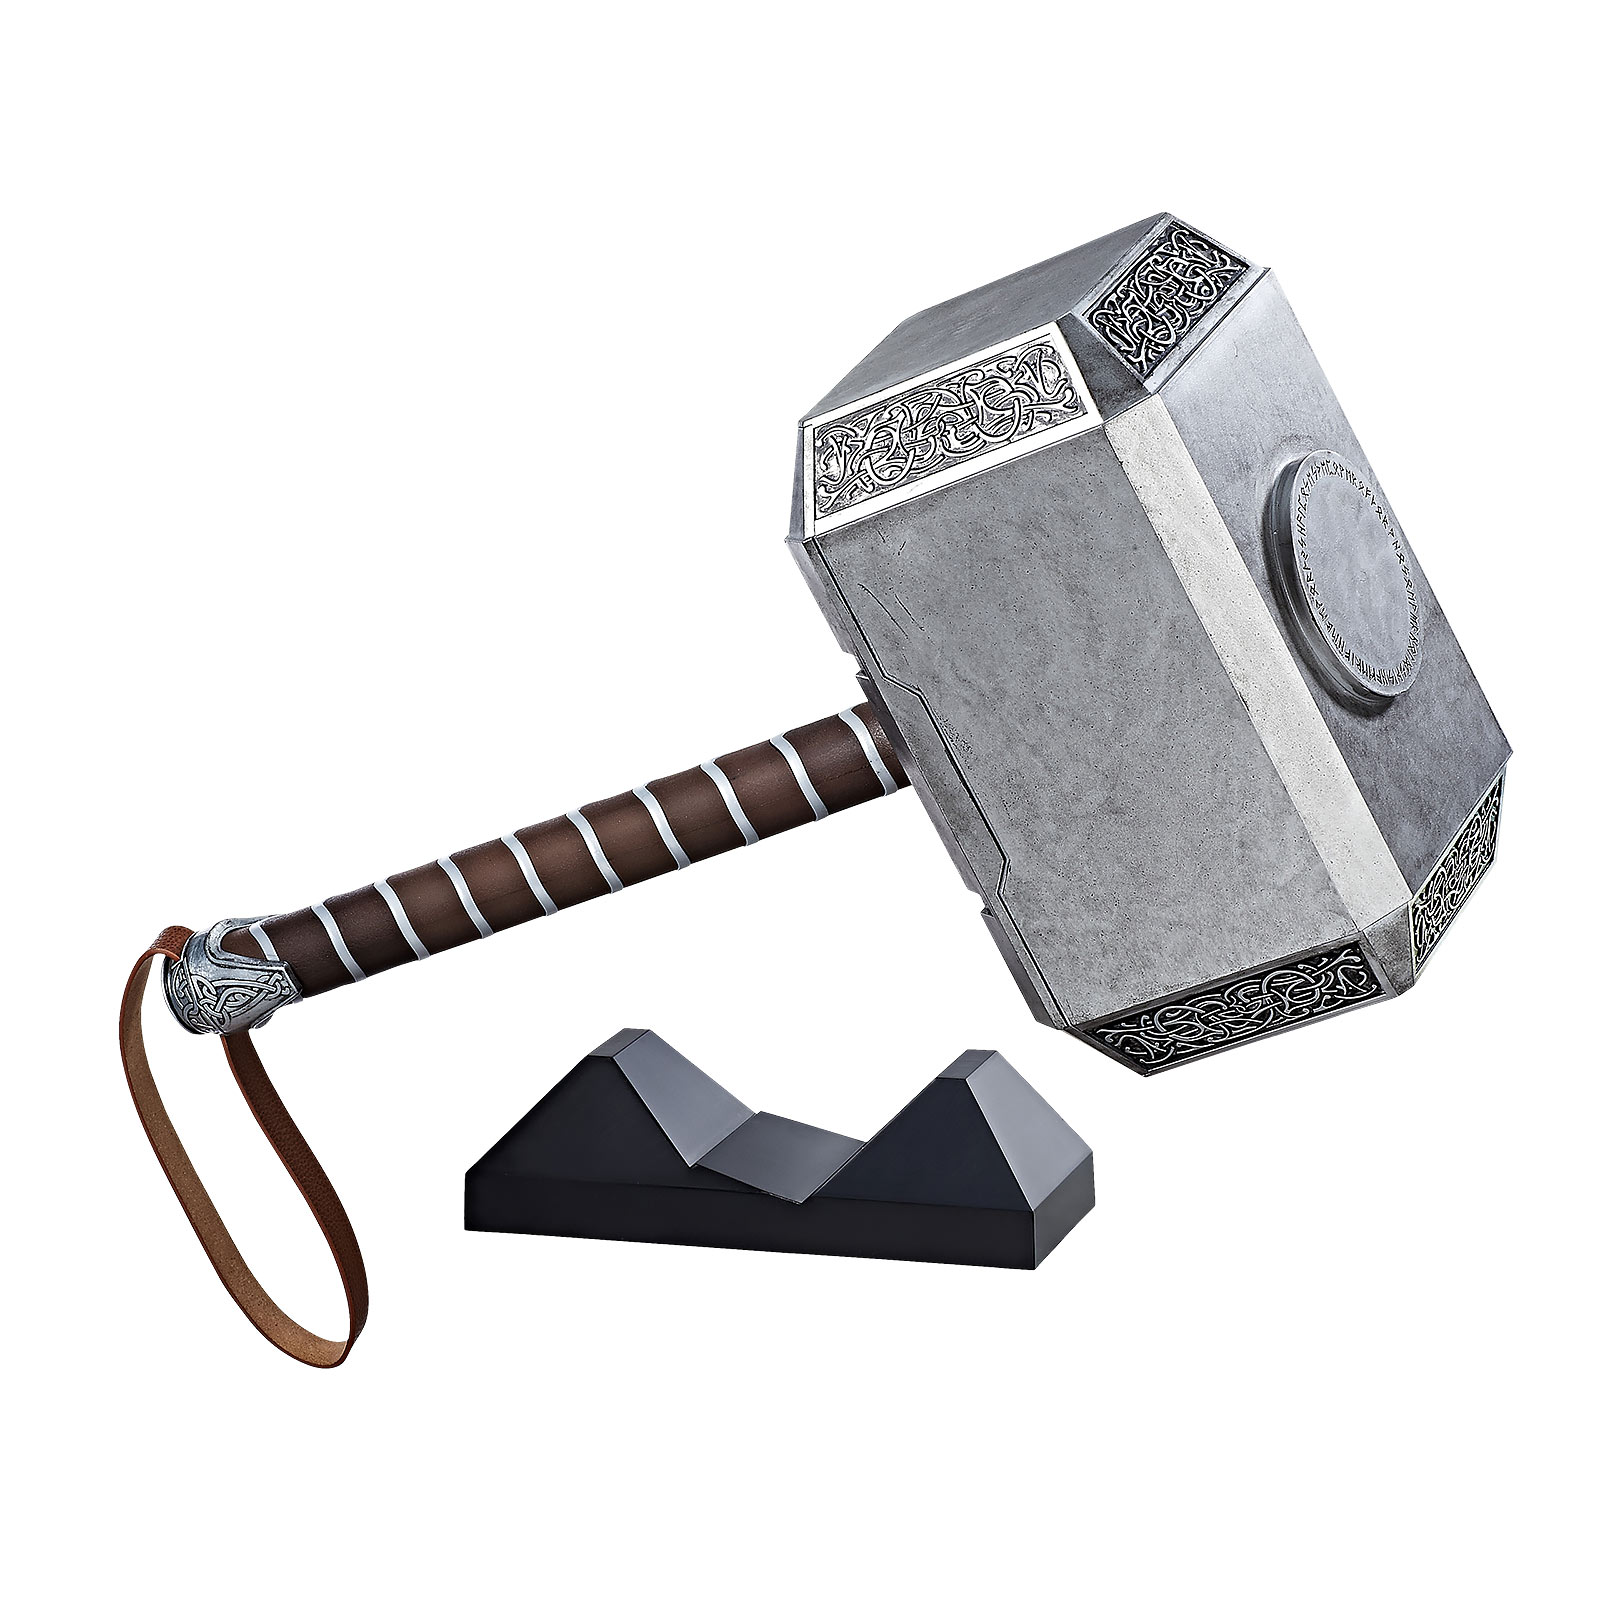 Thor - Hammer Mjolnir Replica with Light and Sound